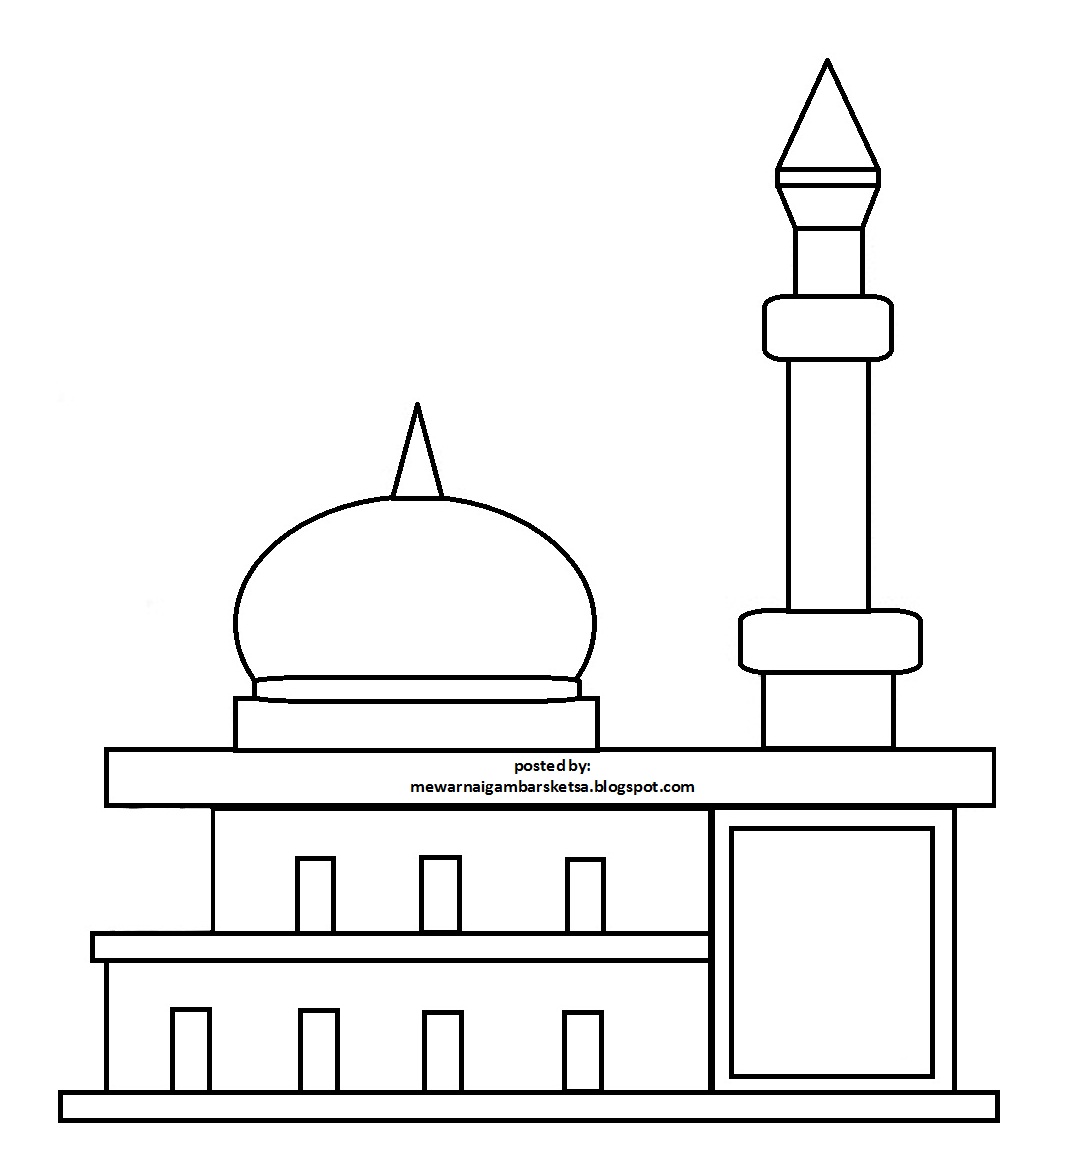 Mewarnai Gambar Mewarnai Gambar Sketsa Masjid 38